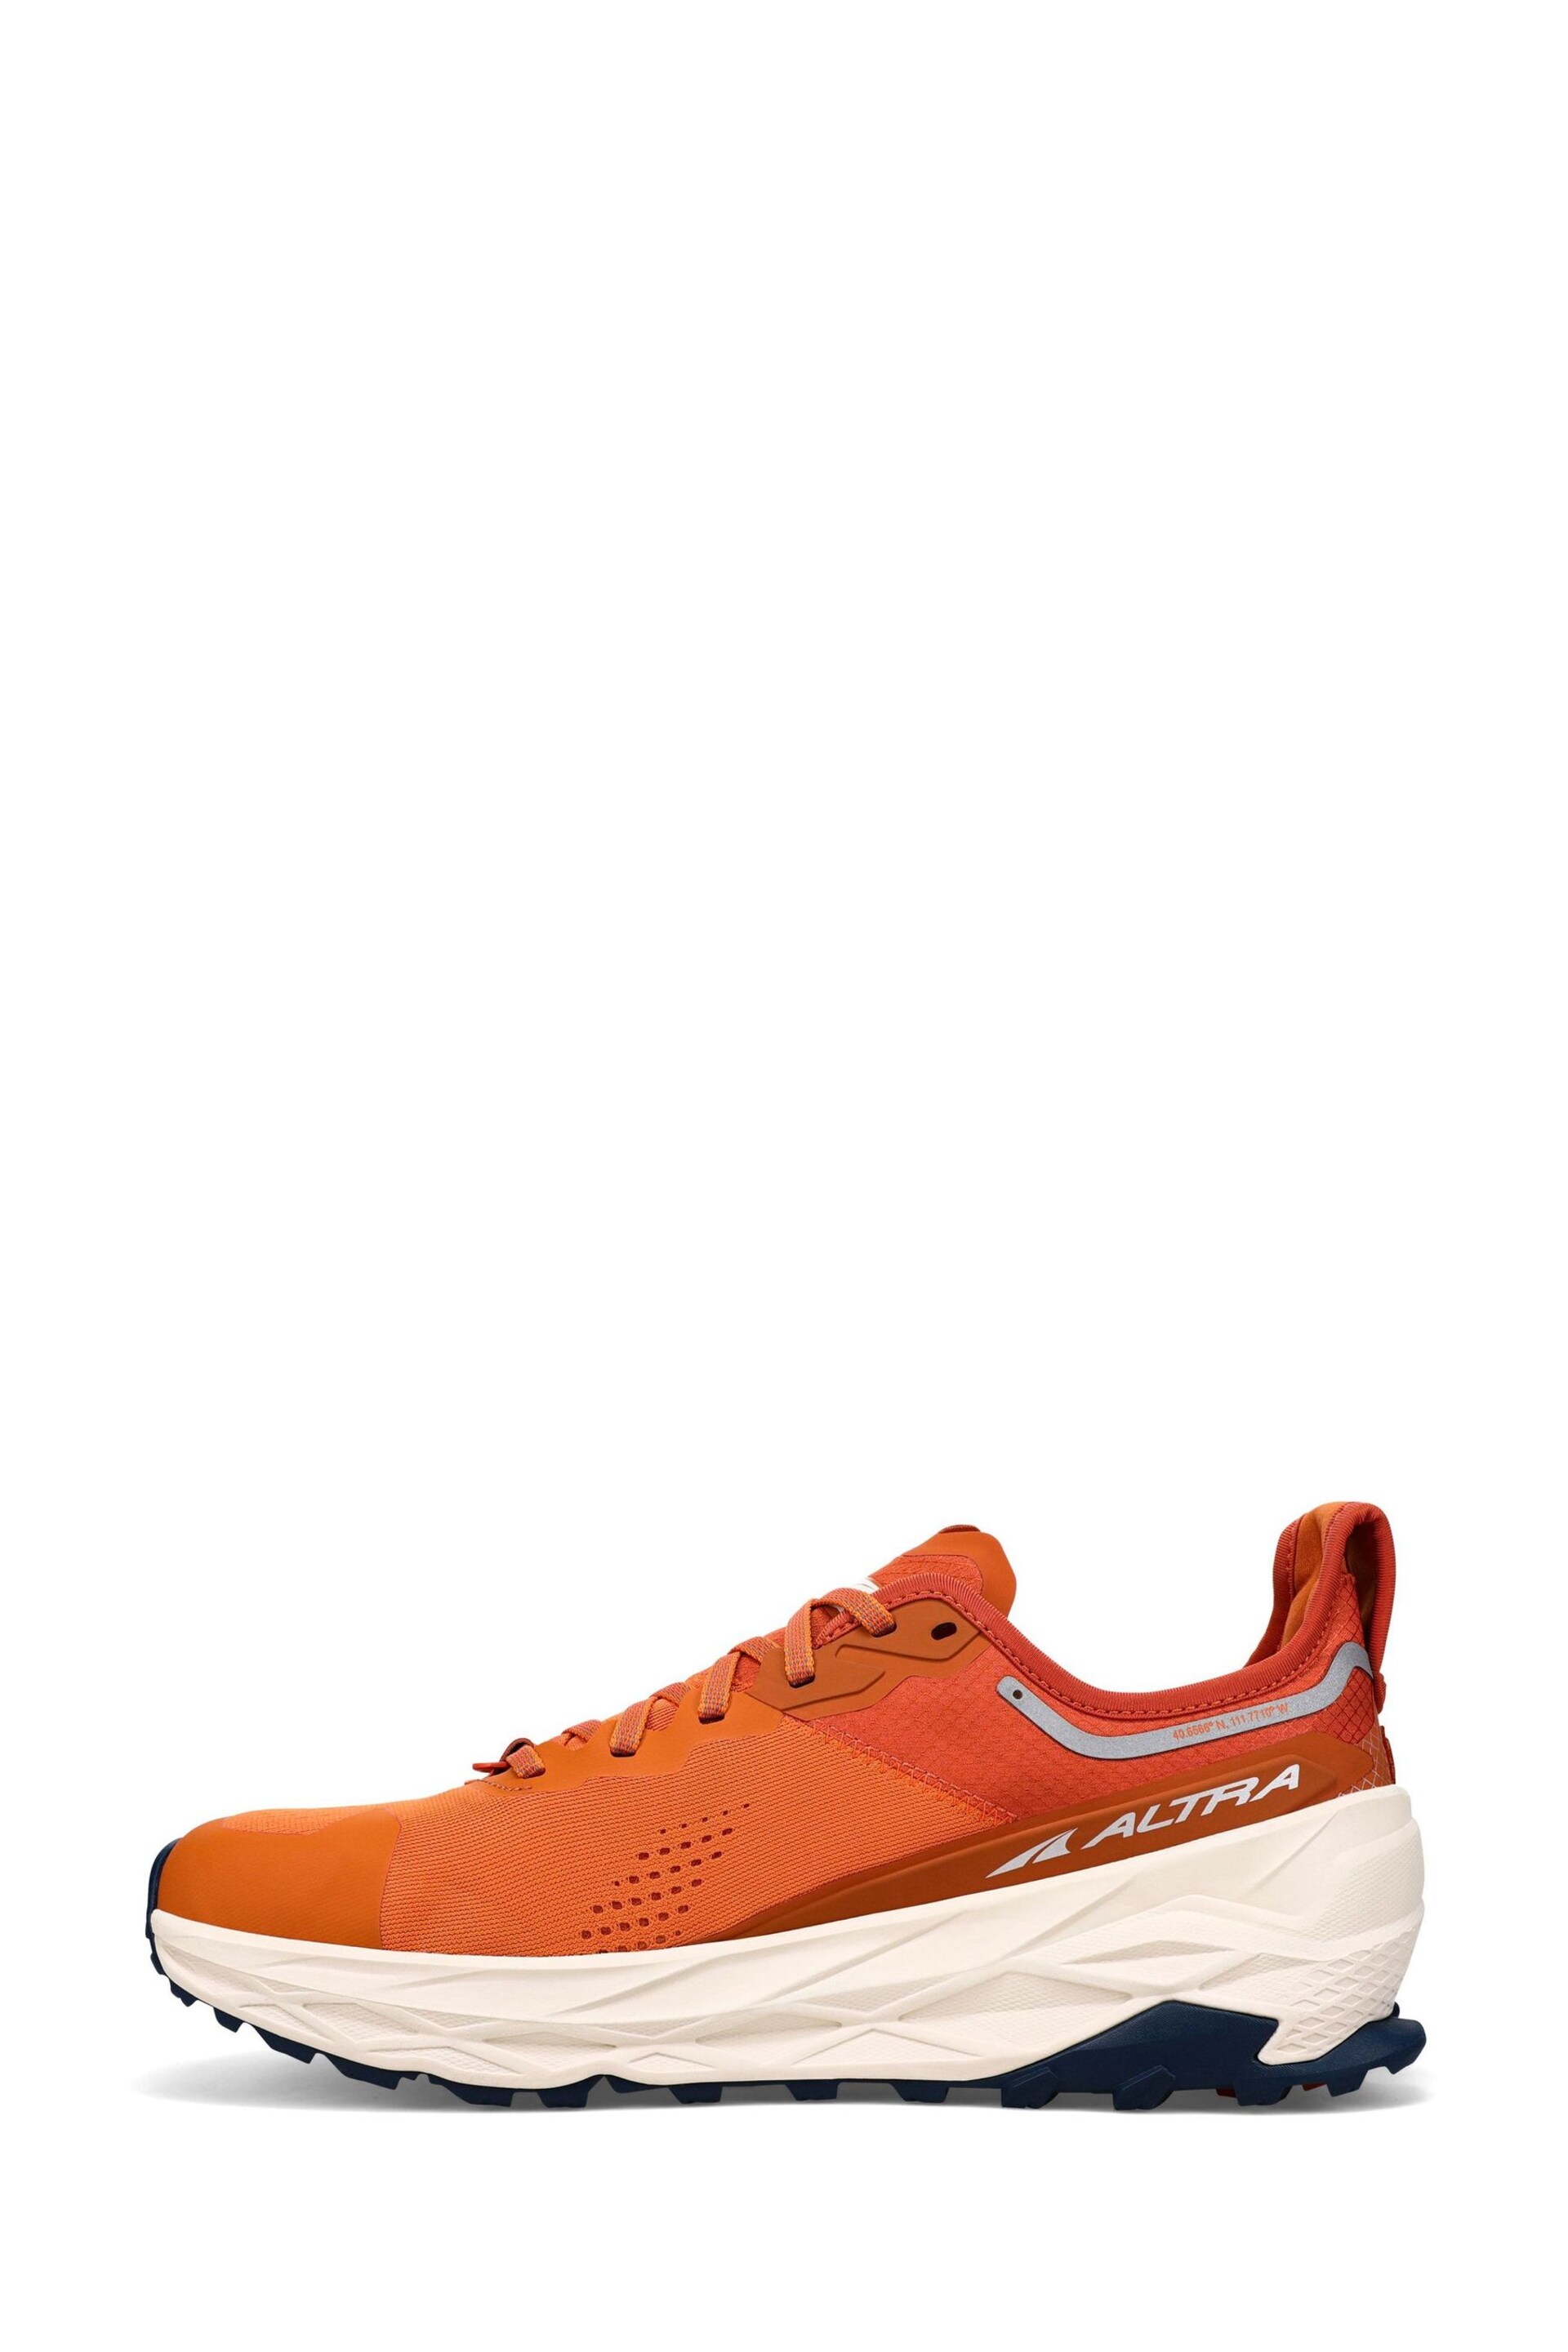 Altra Olympus 5 Brown/Orange Trainers - Image 2 of 4